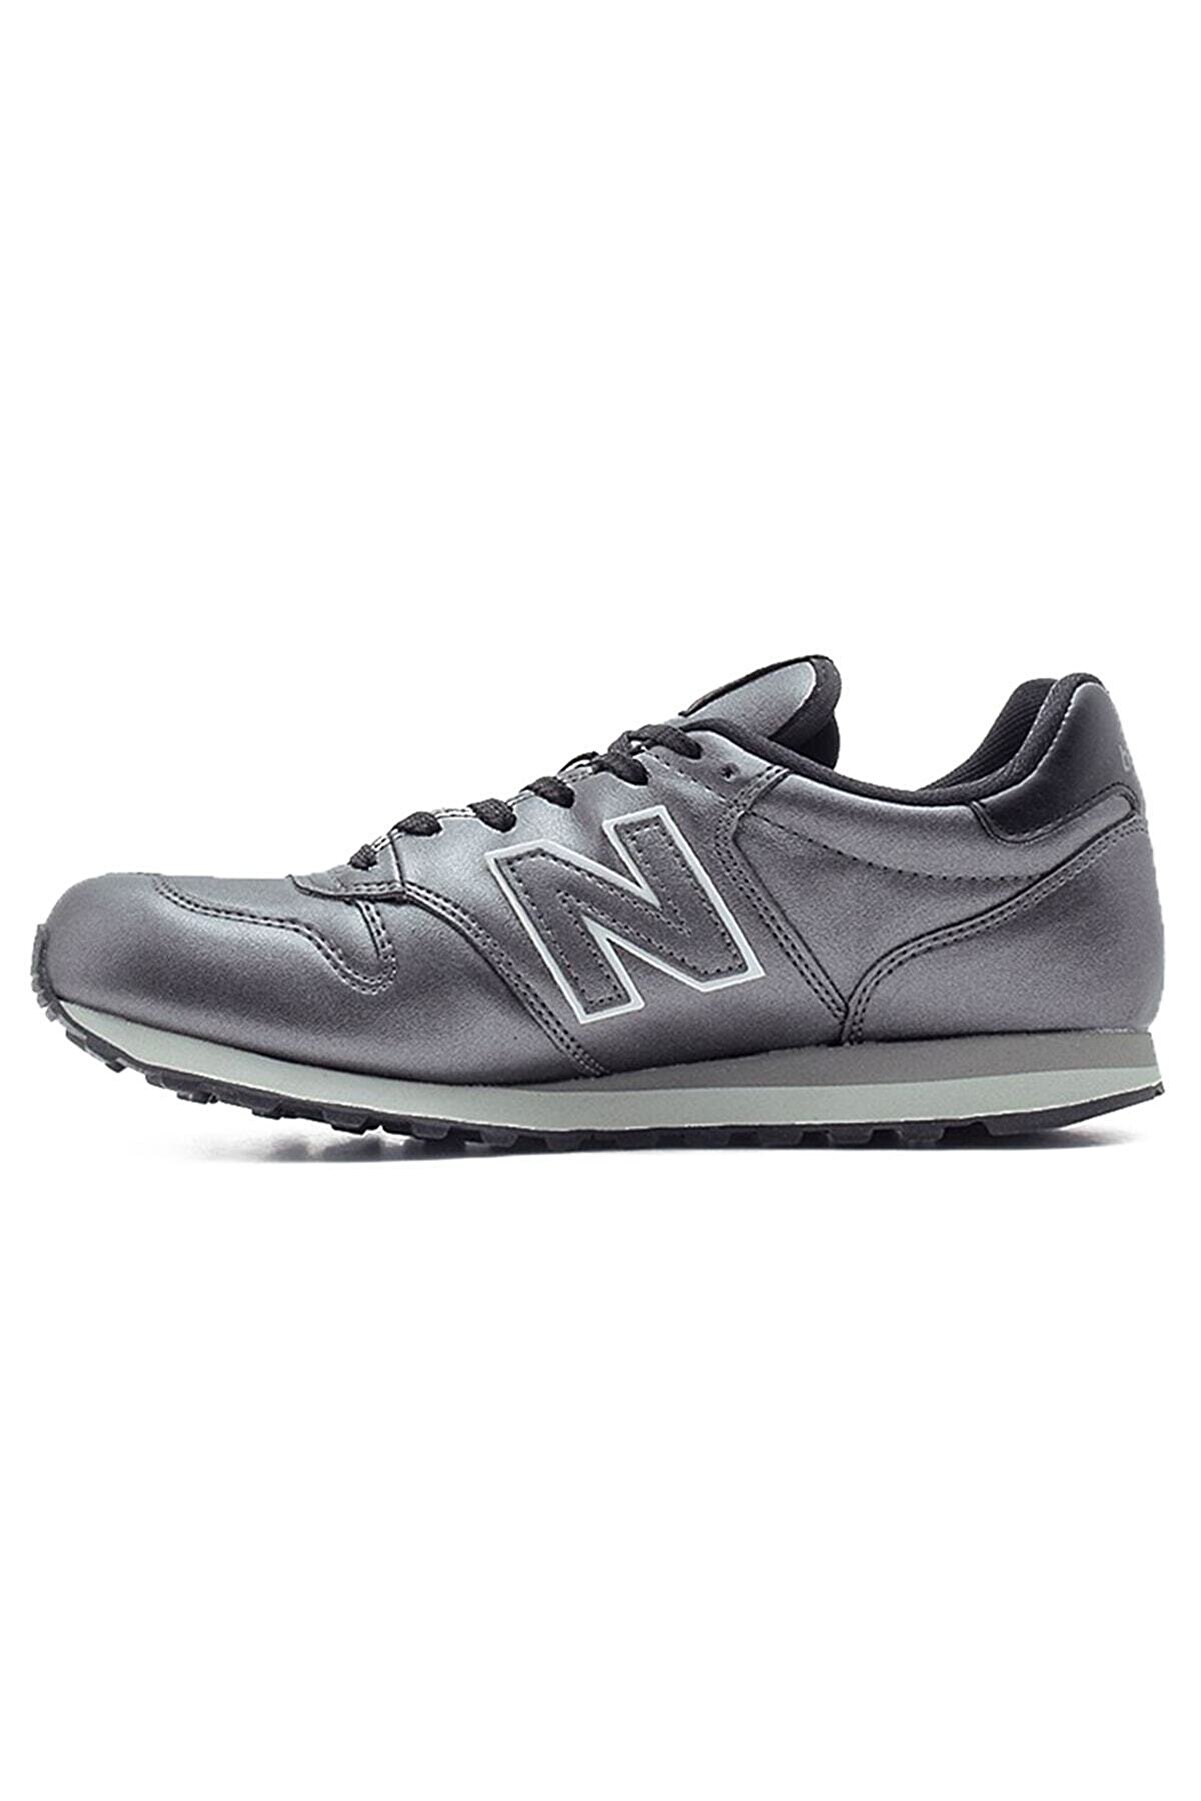 New Balance 500 Ayakkabı Gw500tml